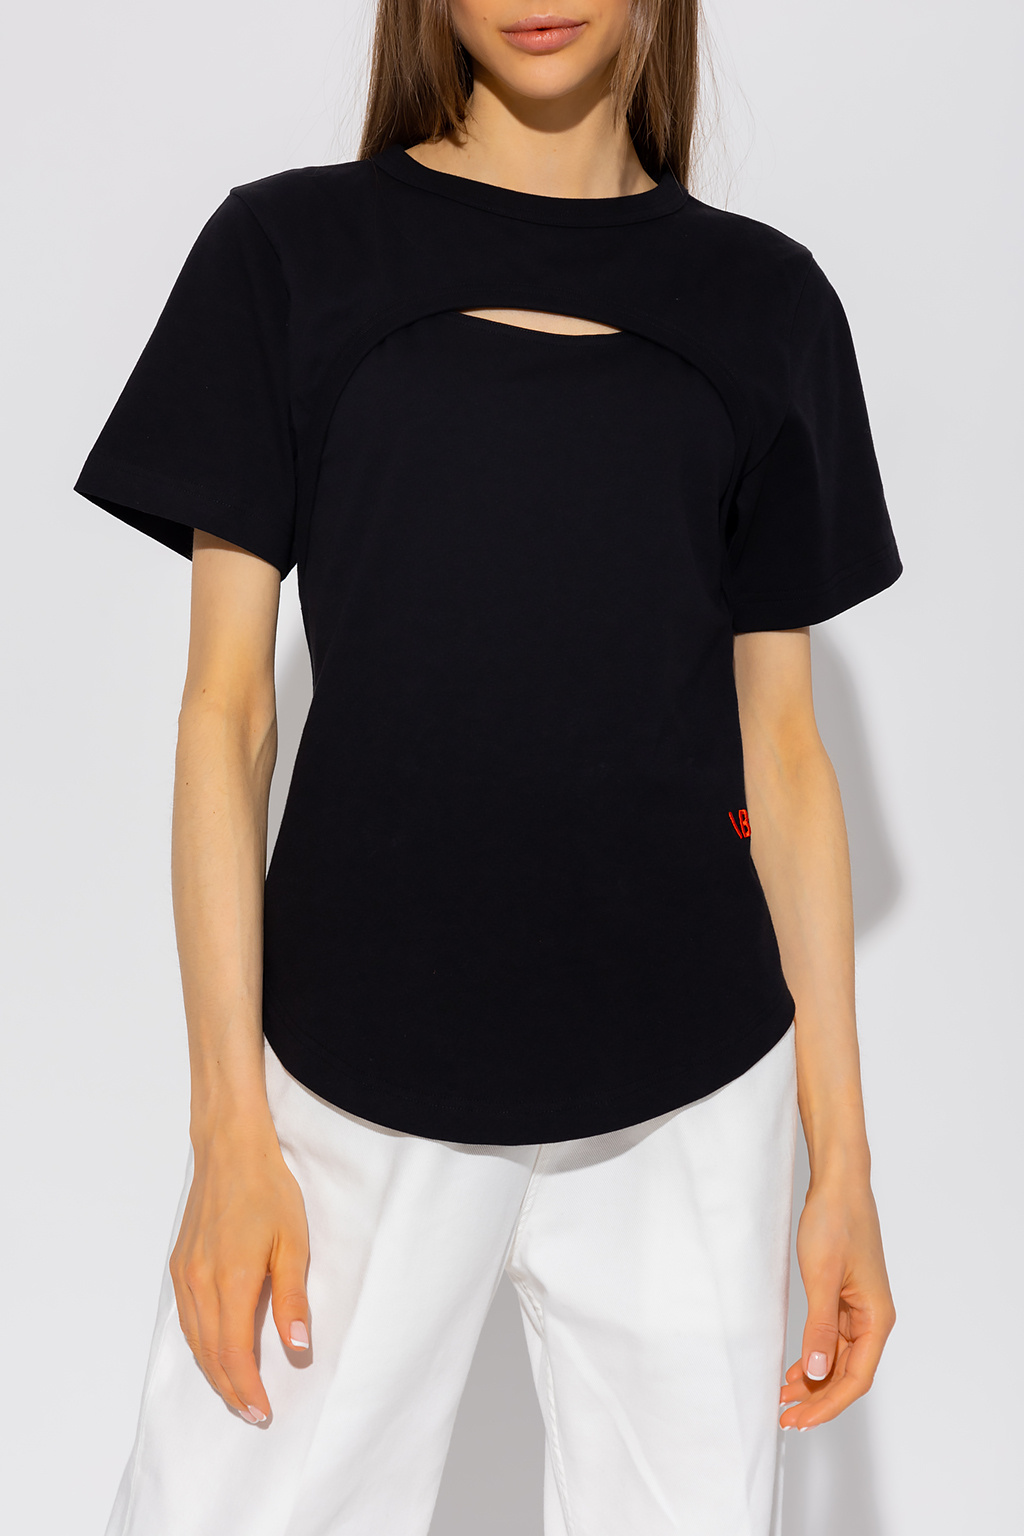 Feng Cheng Wang Sweatshirts & Knitwear BOSS Weevo Sort sweatshirt med kontrastlogo